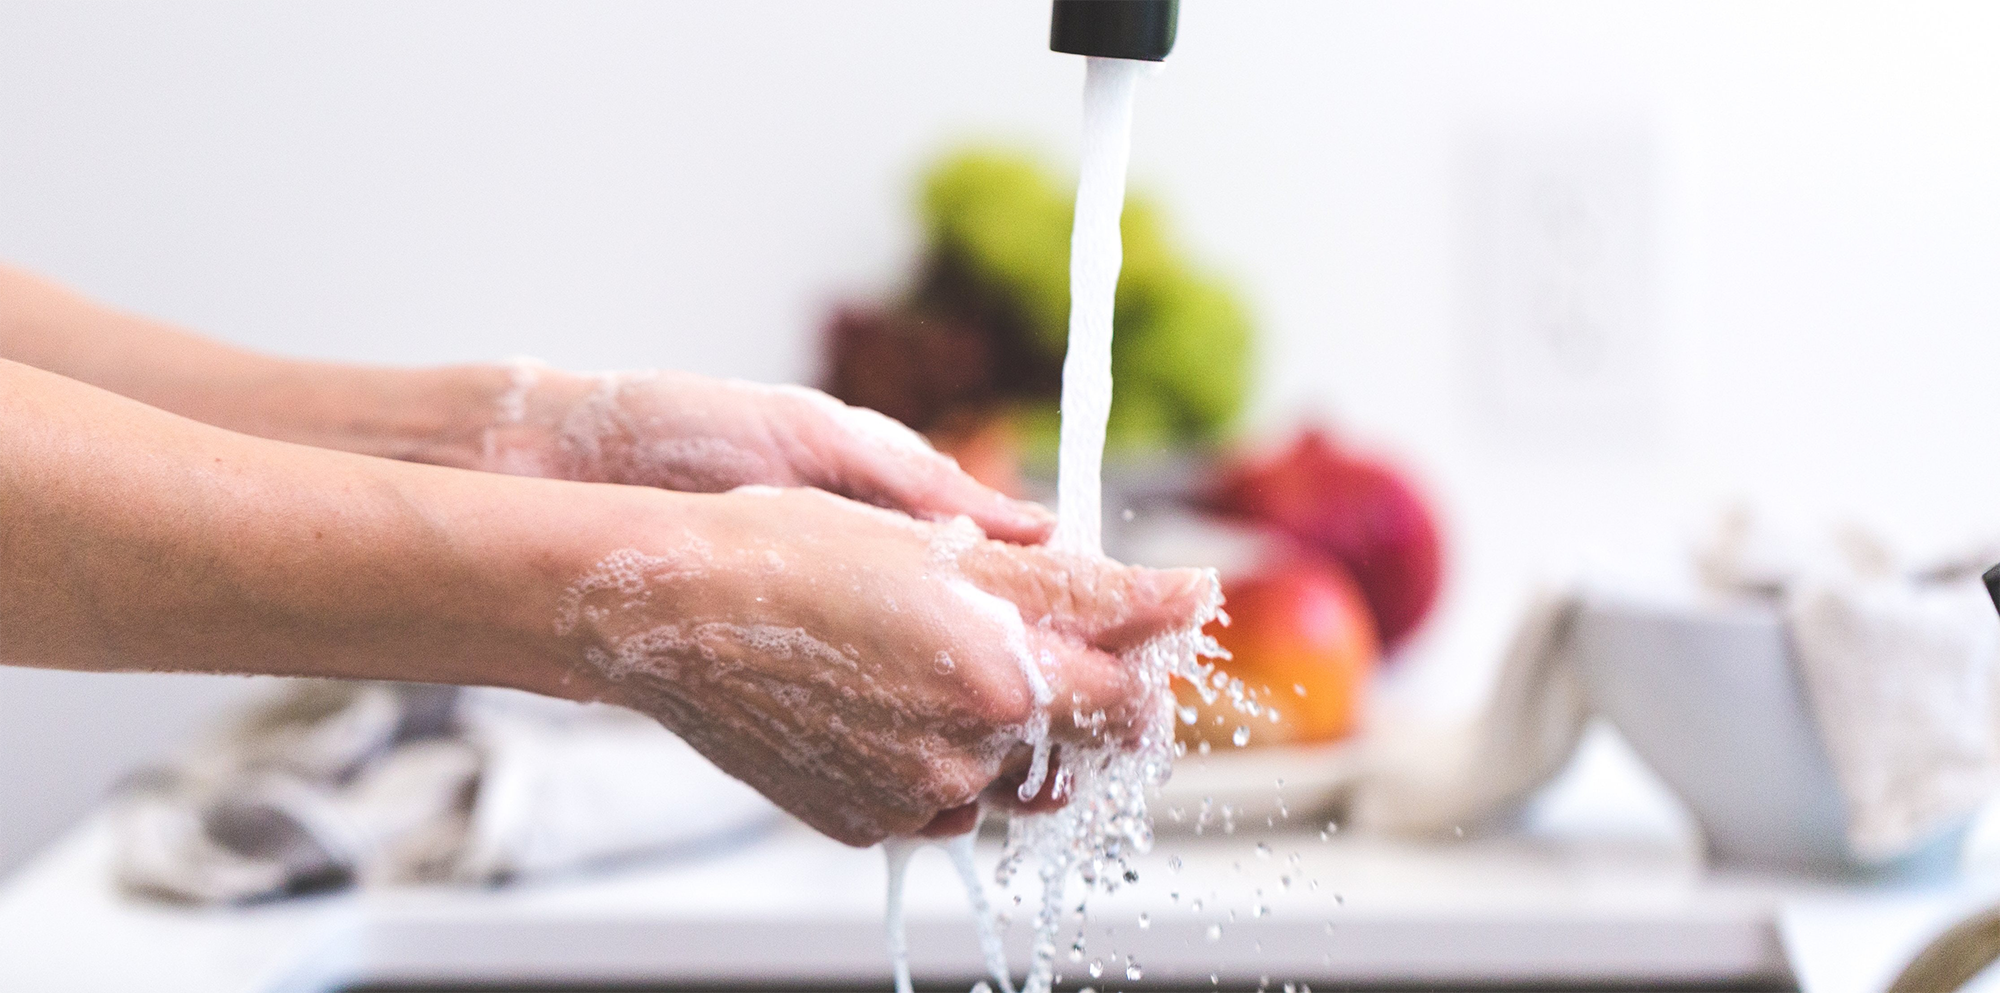 cooking-hands-handwashing-health-2.png